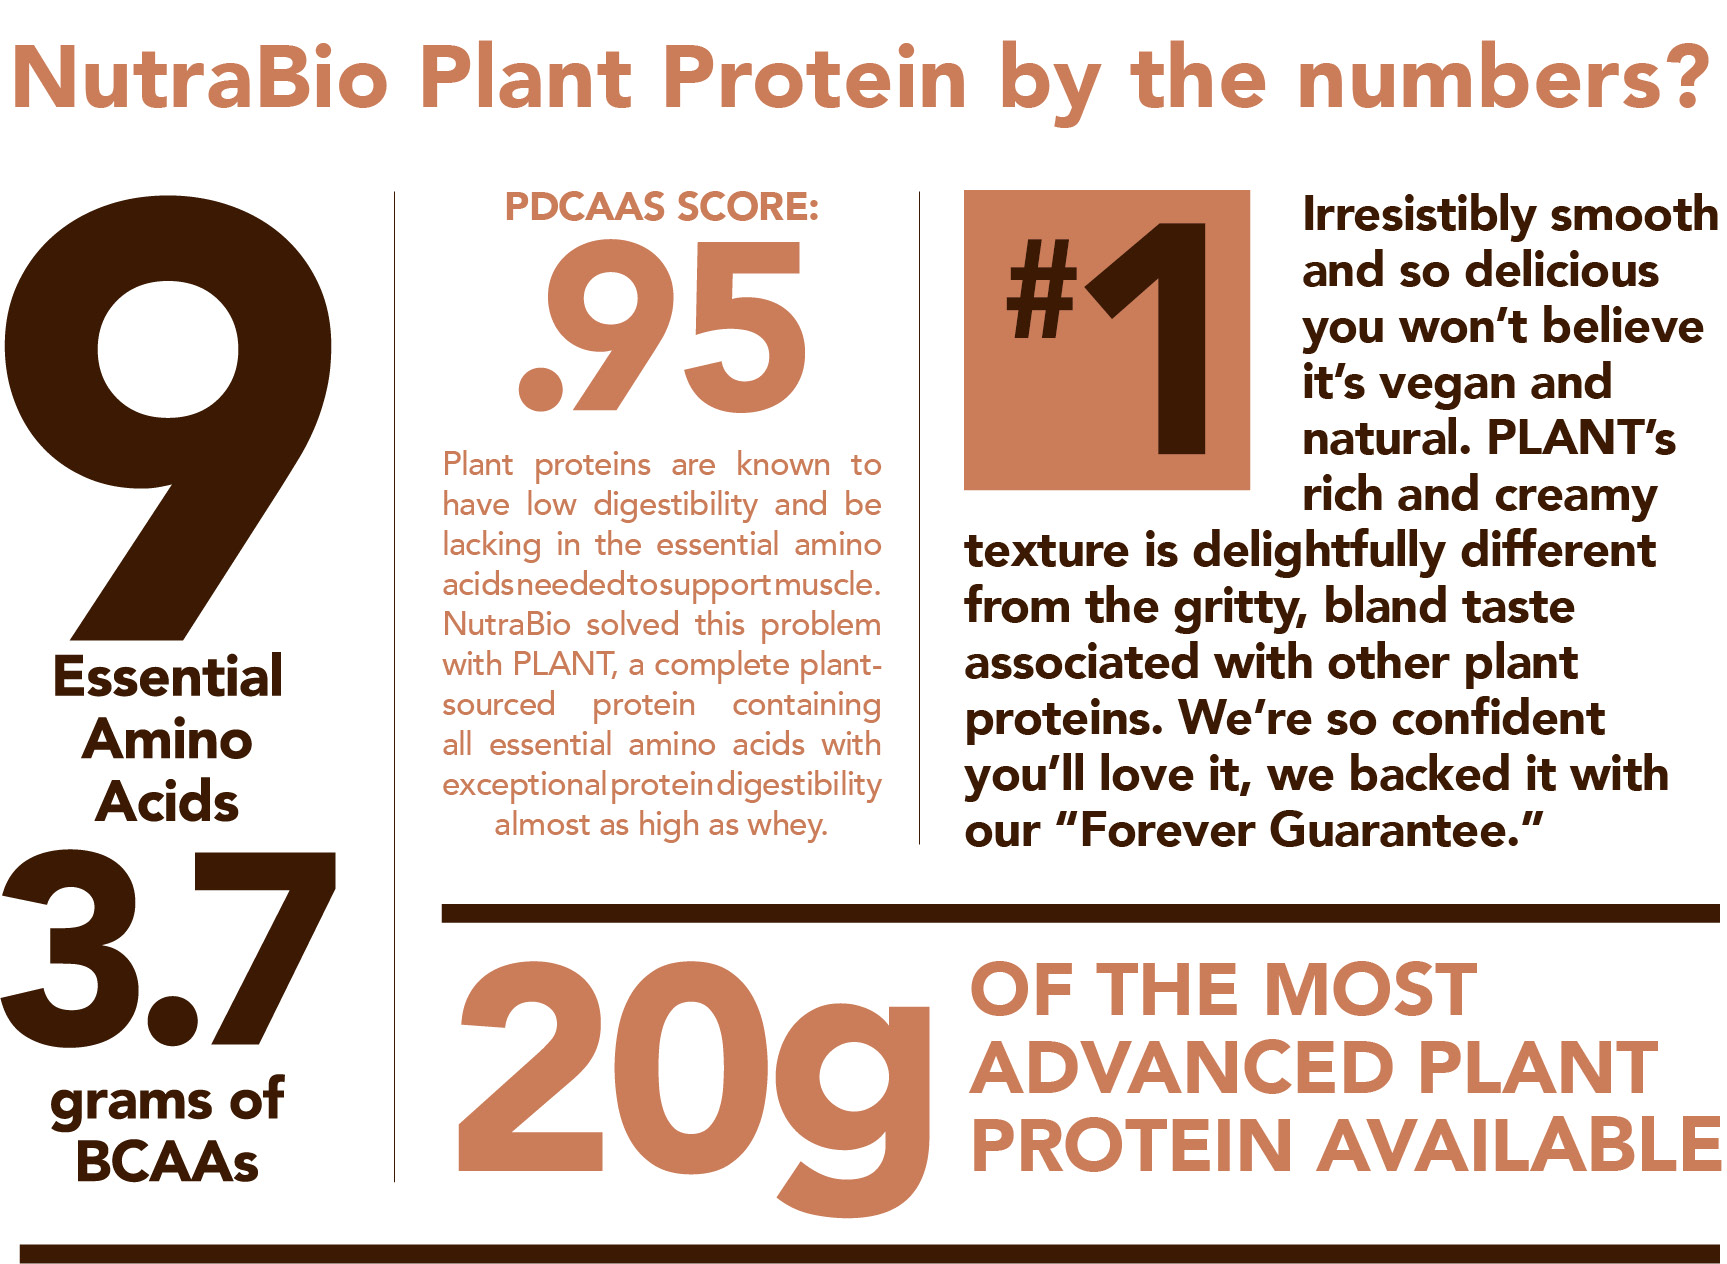 NutraBio Plant Protein Benefits